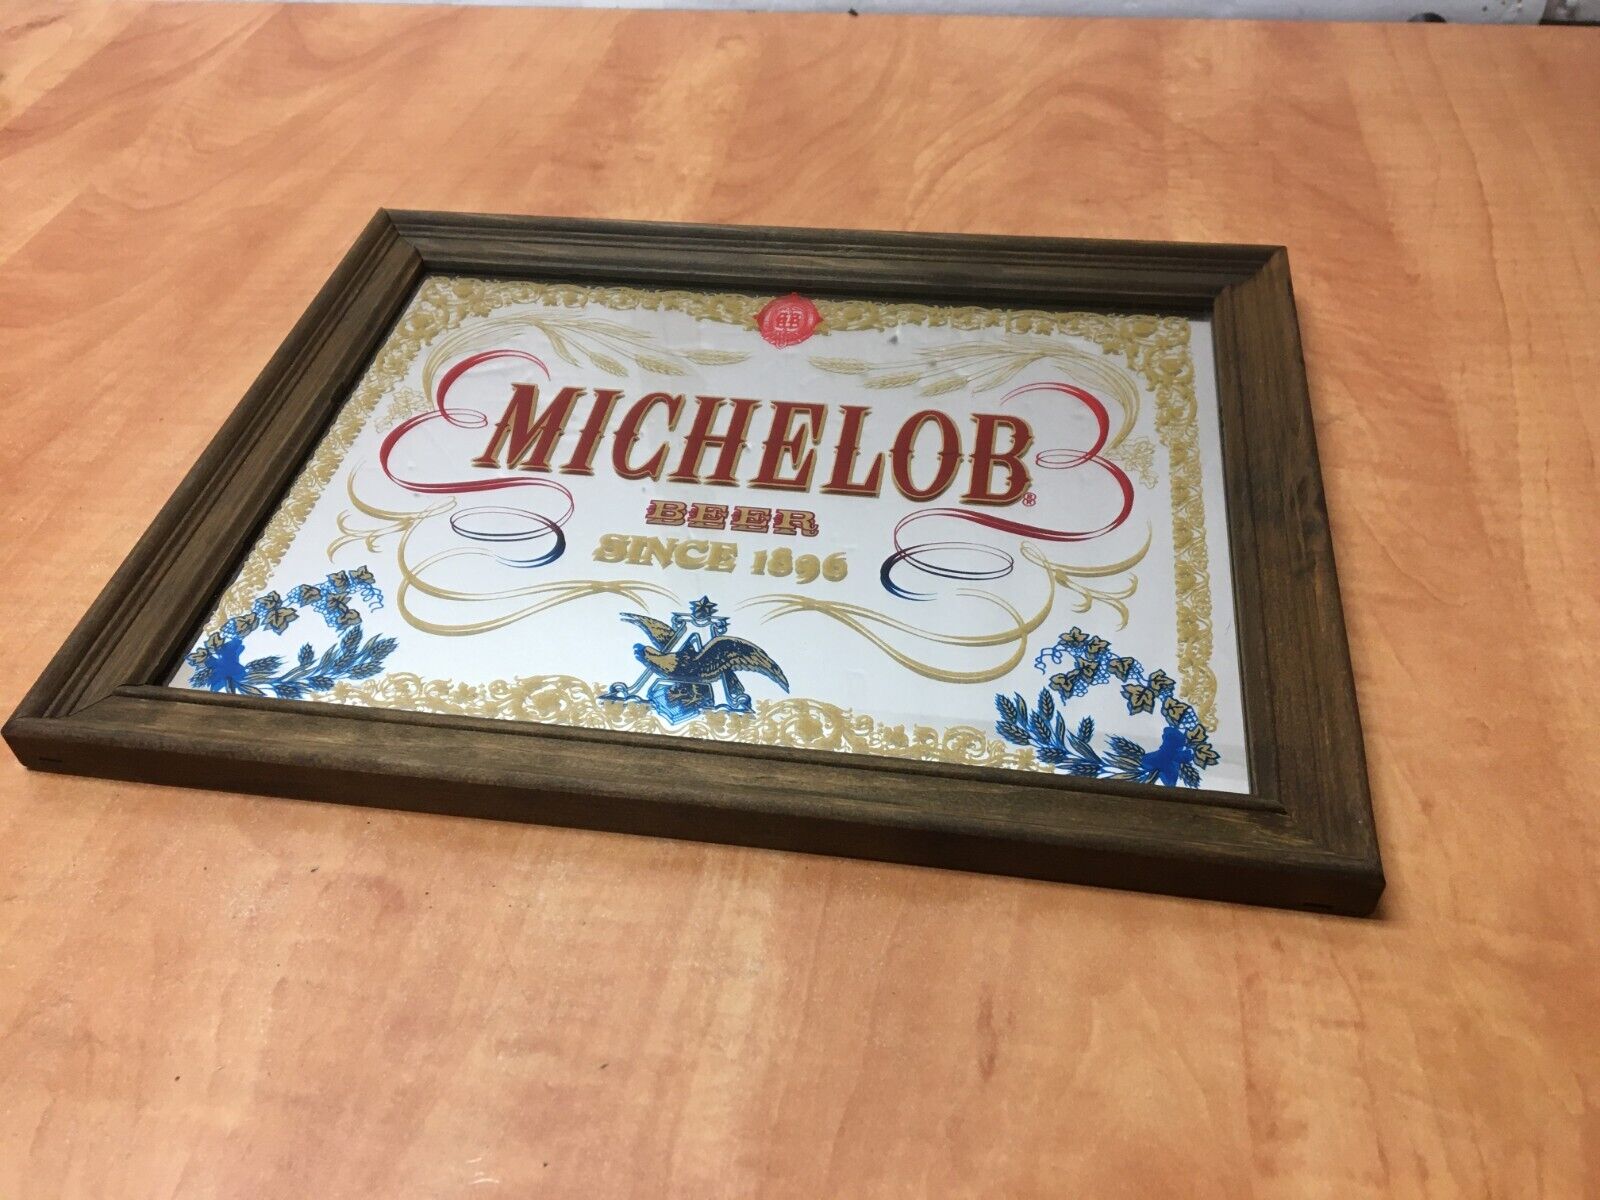 Vintage Michelob Beer Since 1896 Mirror Bar Sign Wood Frame 14x11 Man Cave